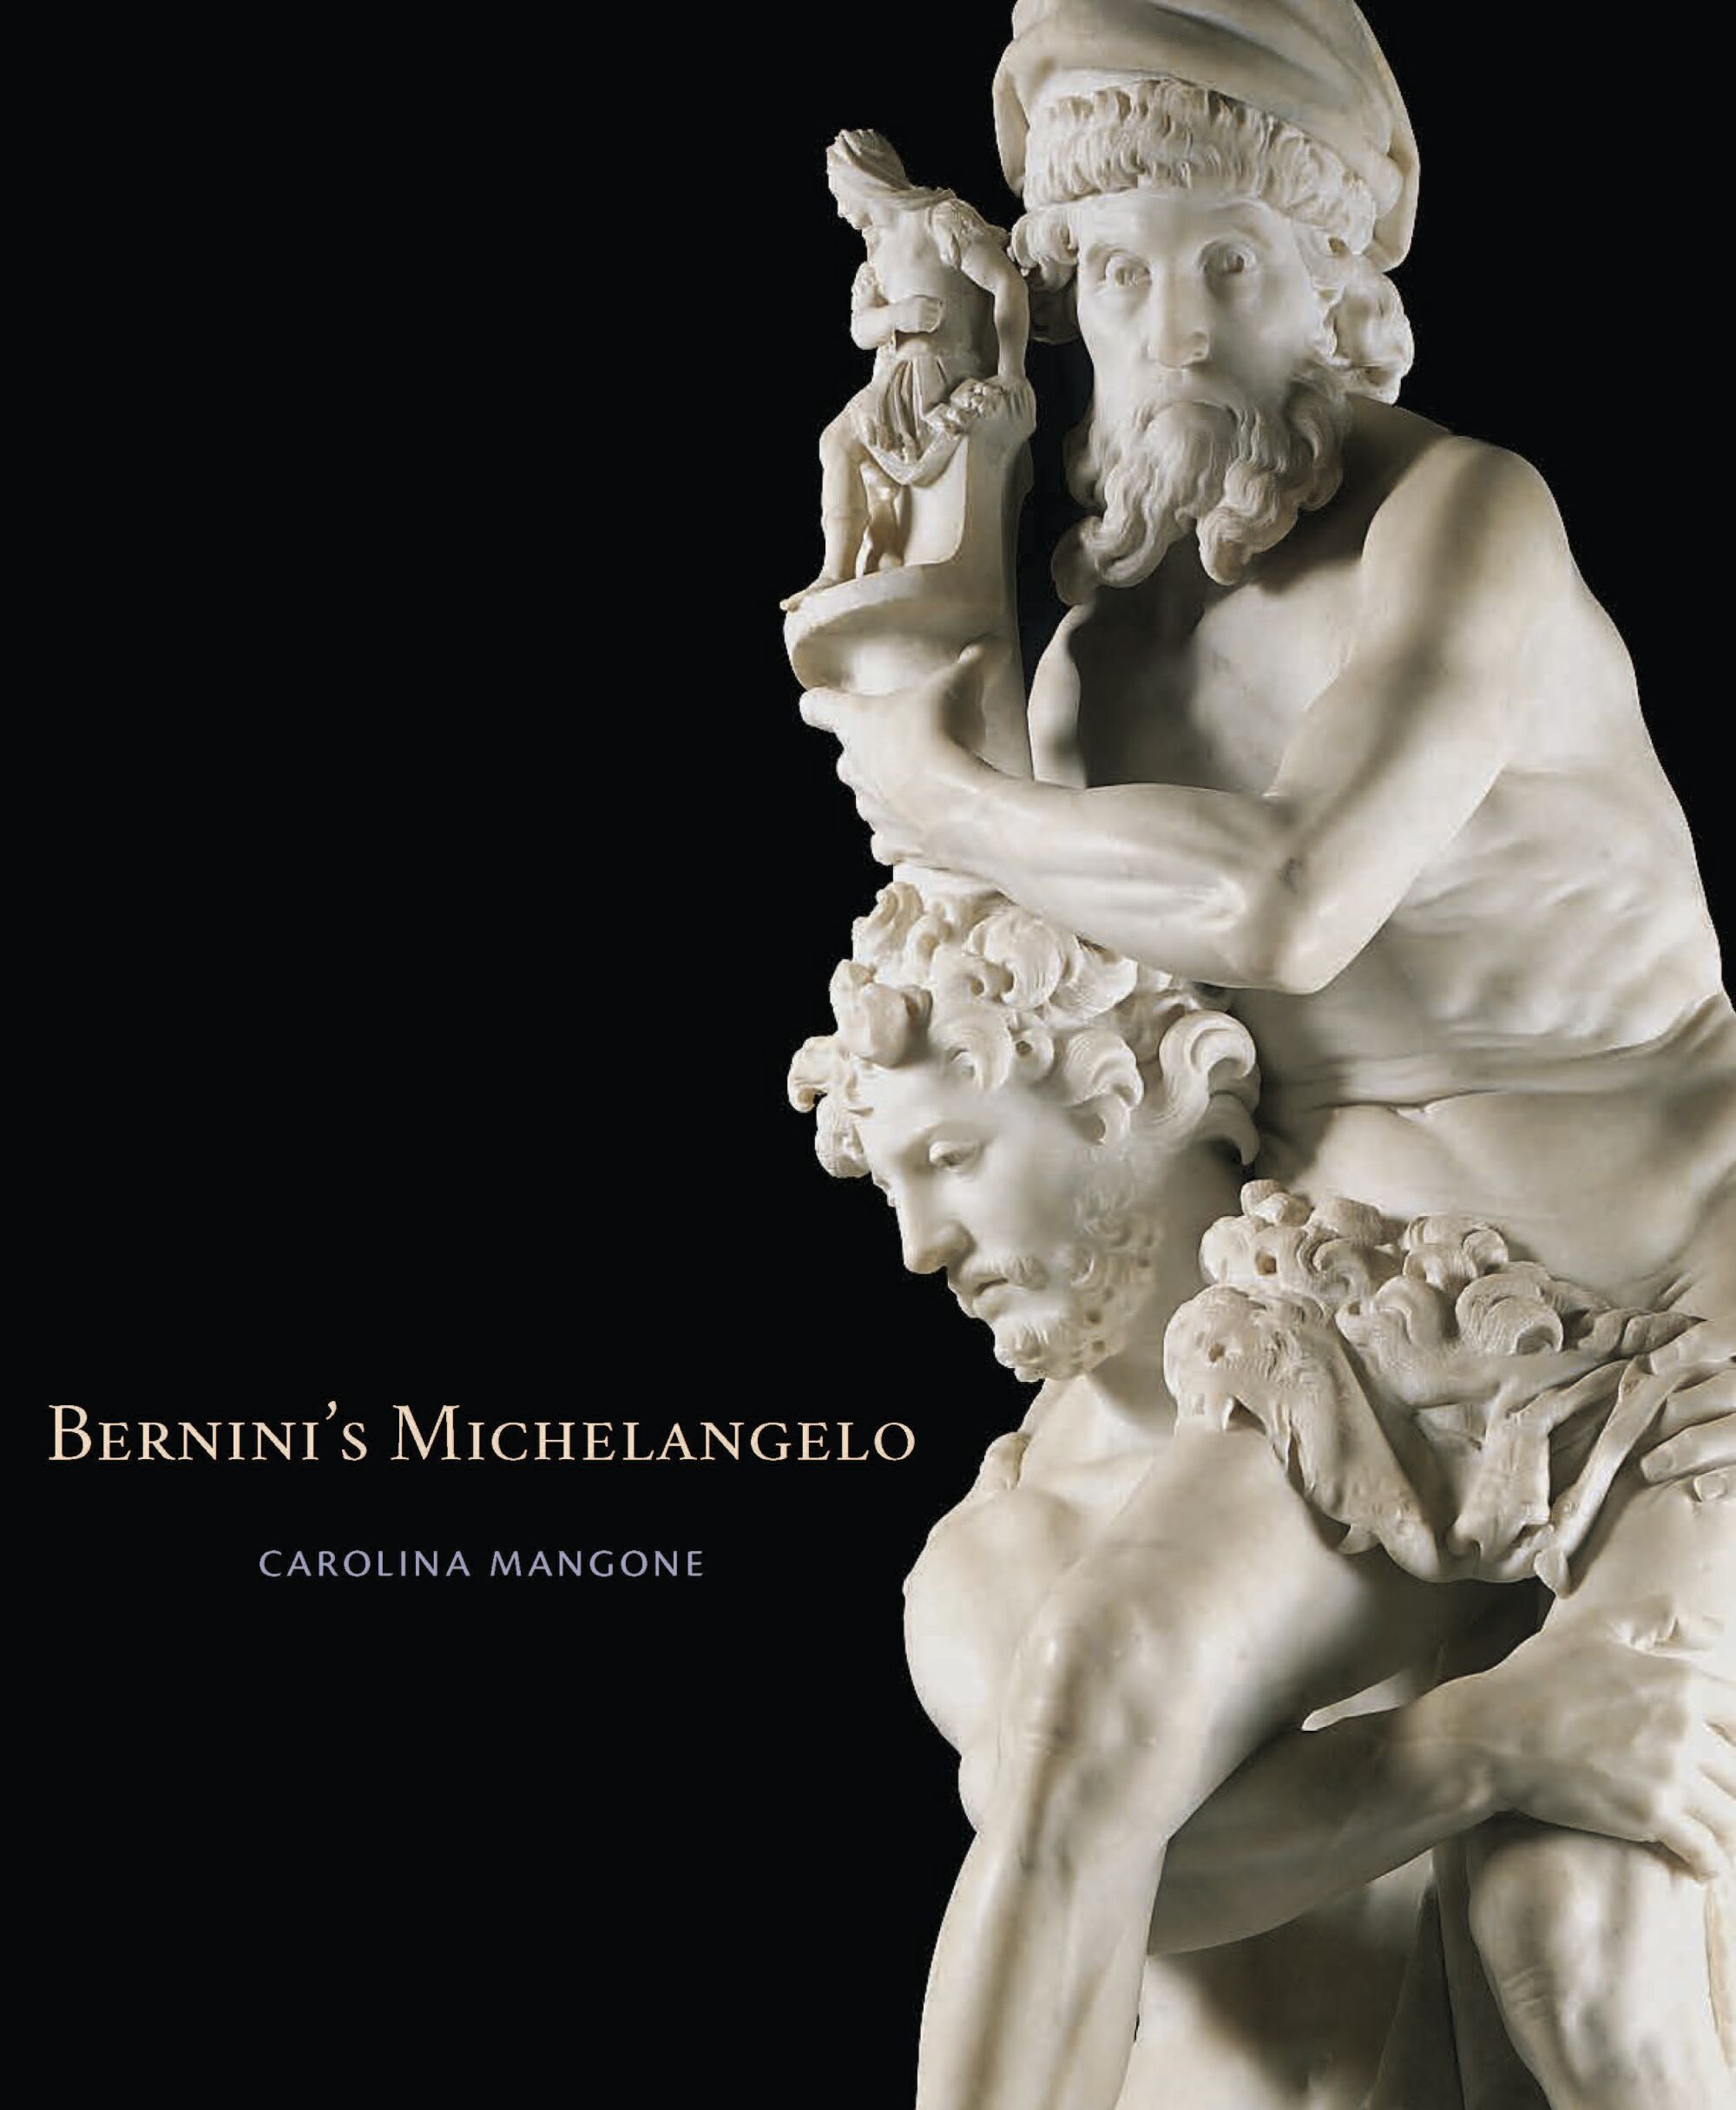 Carolina Mangone, "Bernini's Michelangelo"